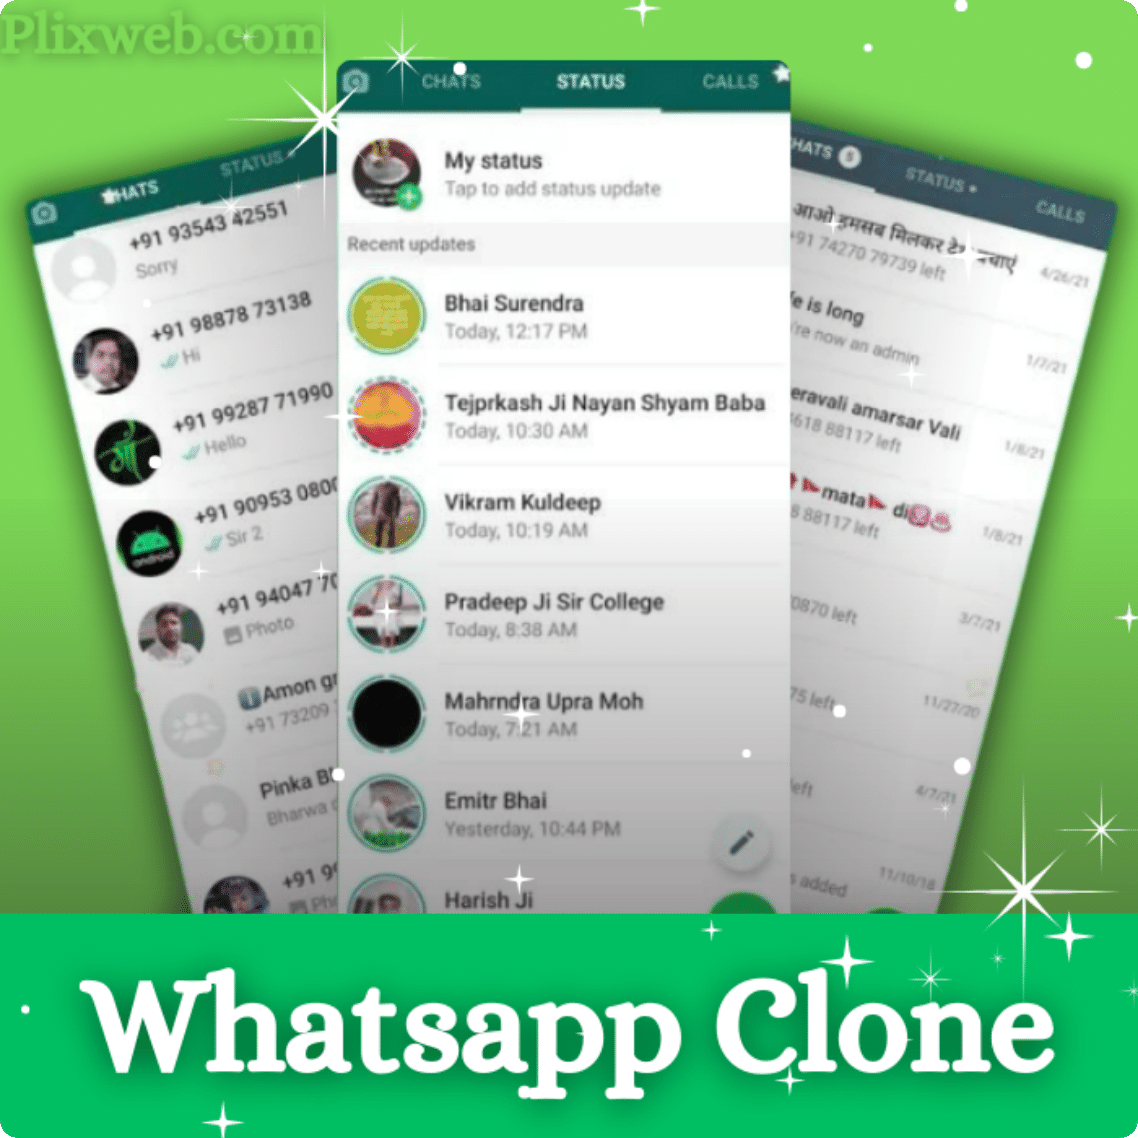 Whatapp Clone App Development